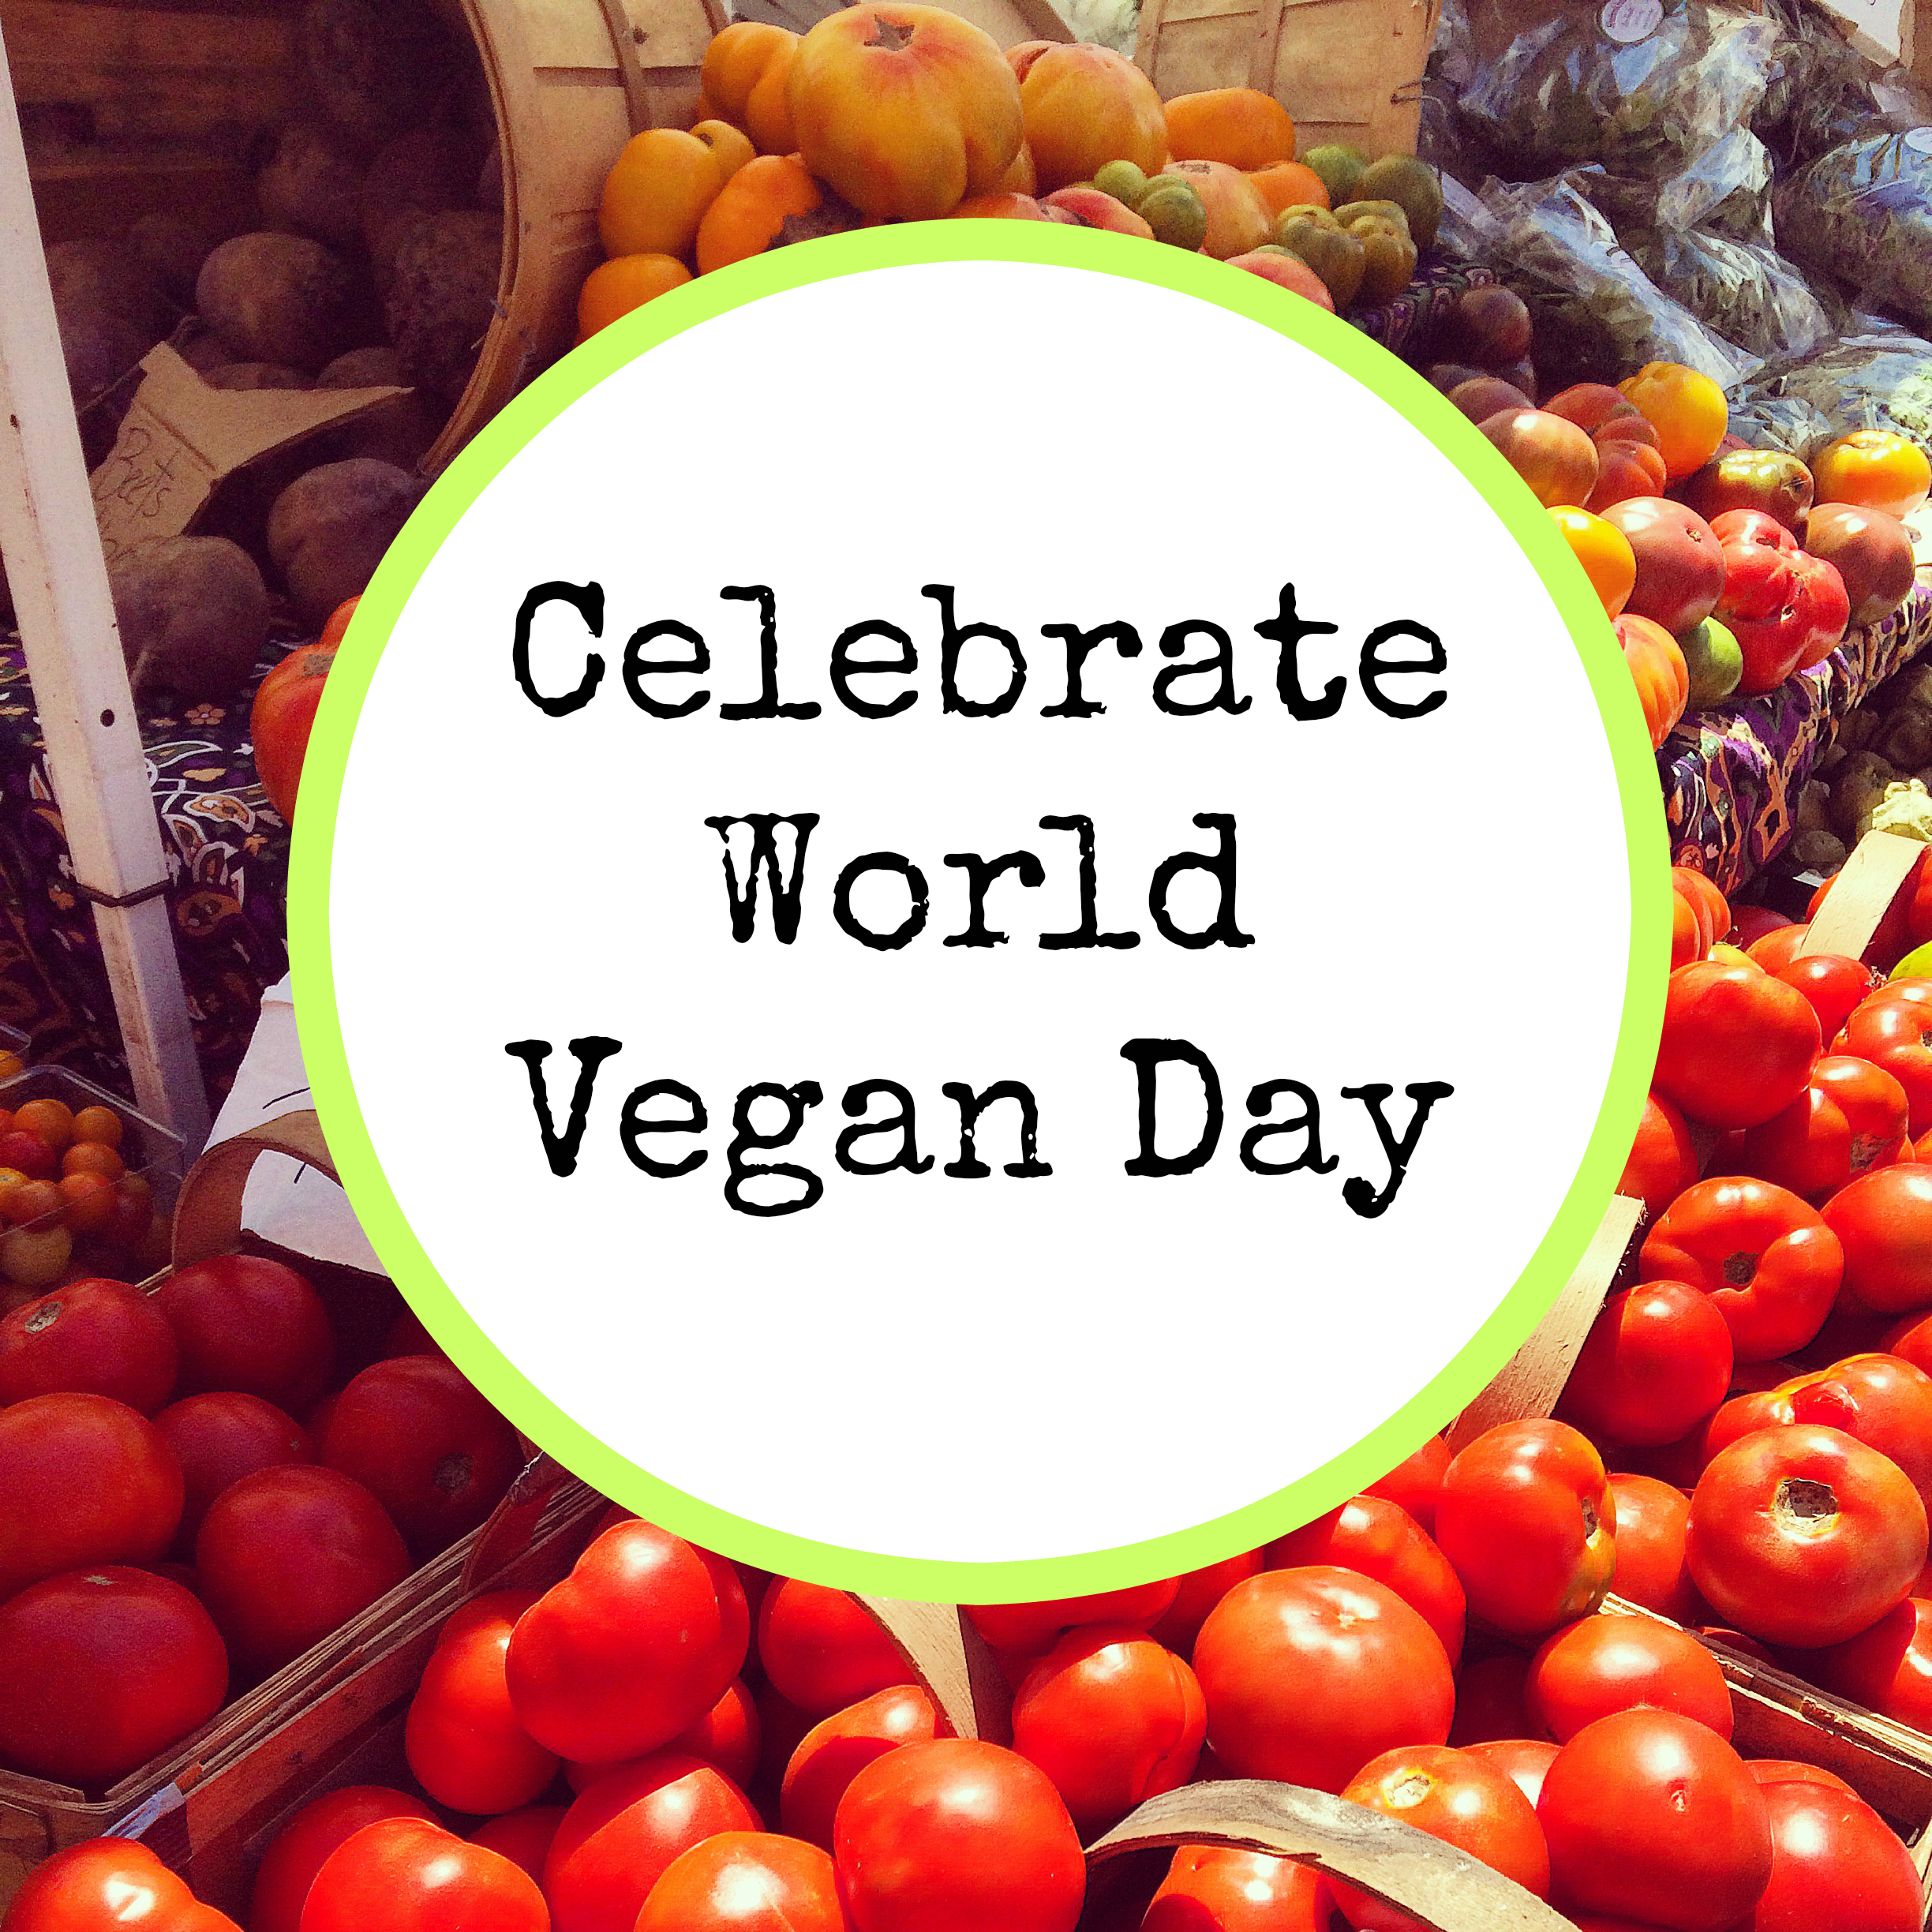 World Vegan Day Facts